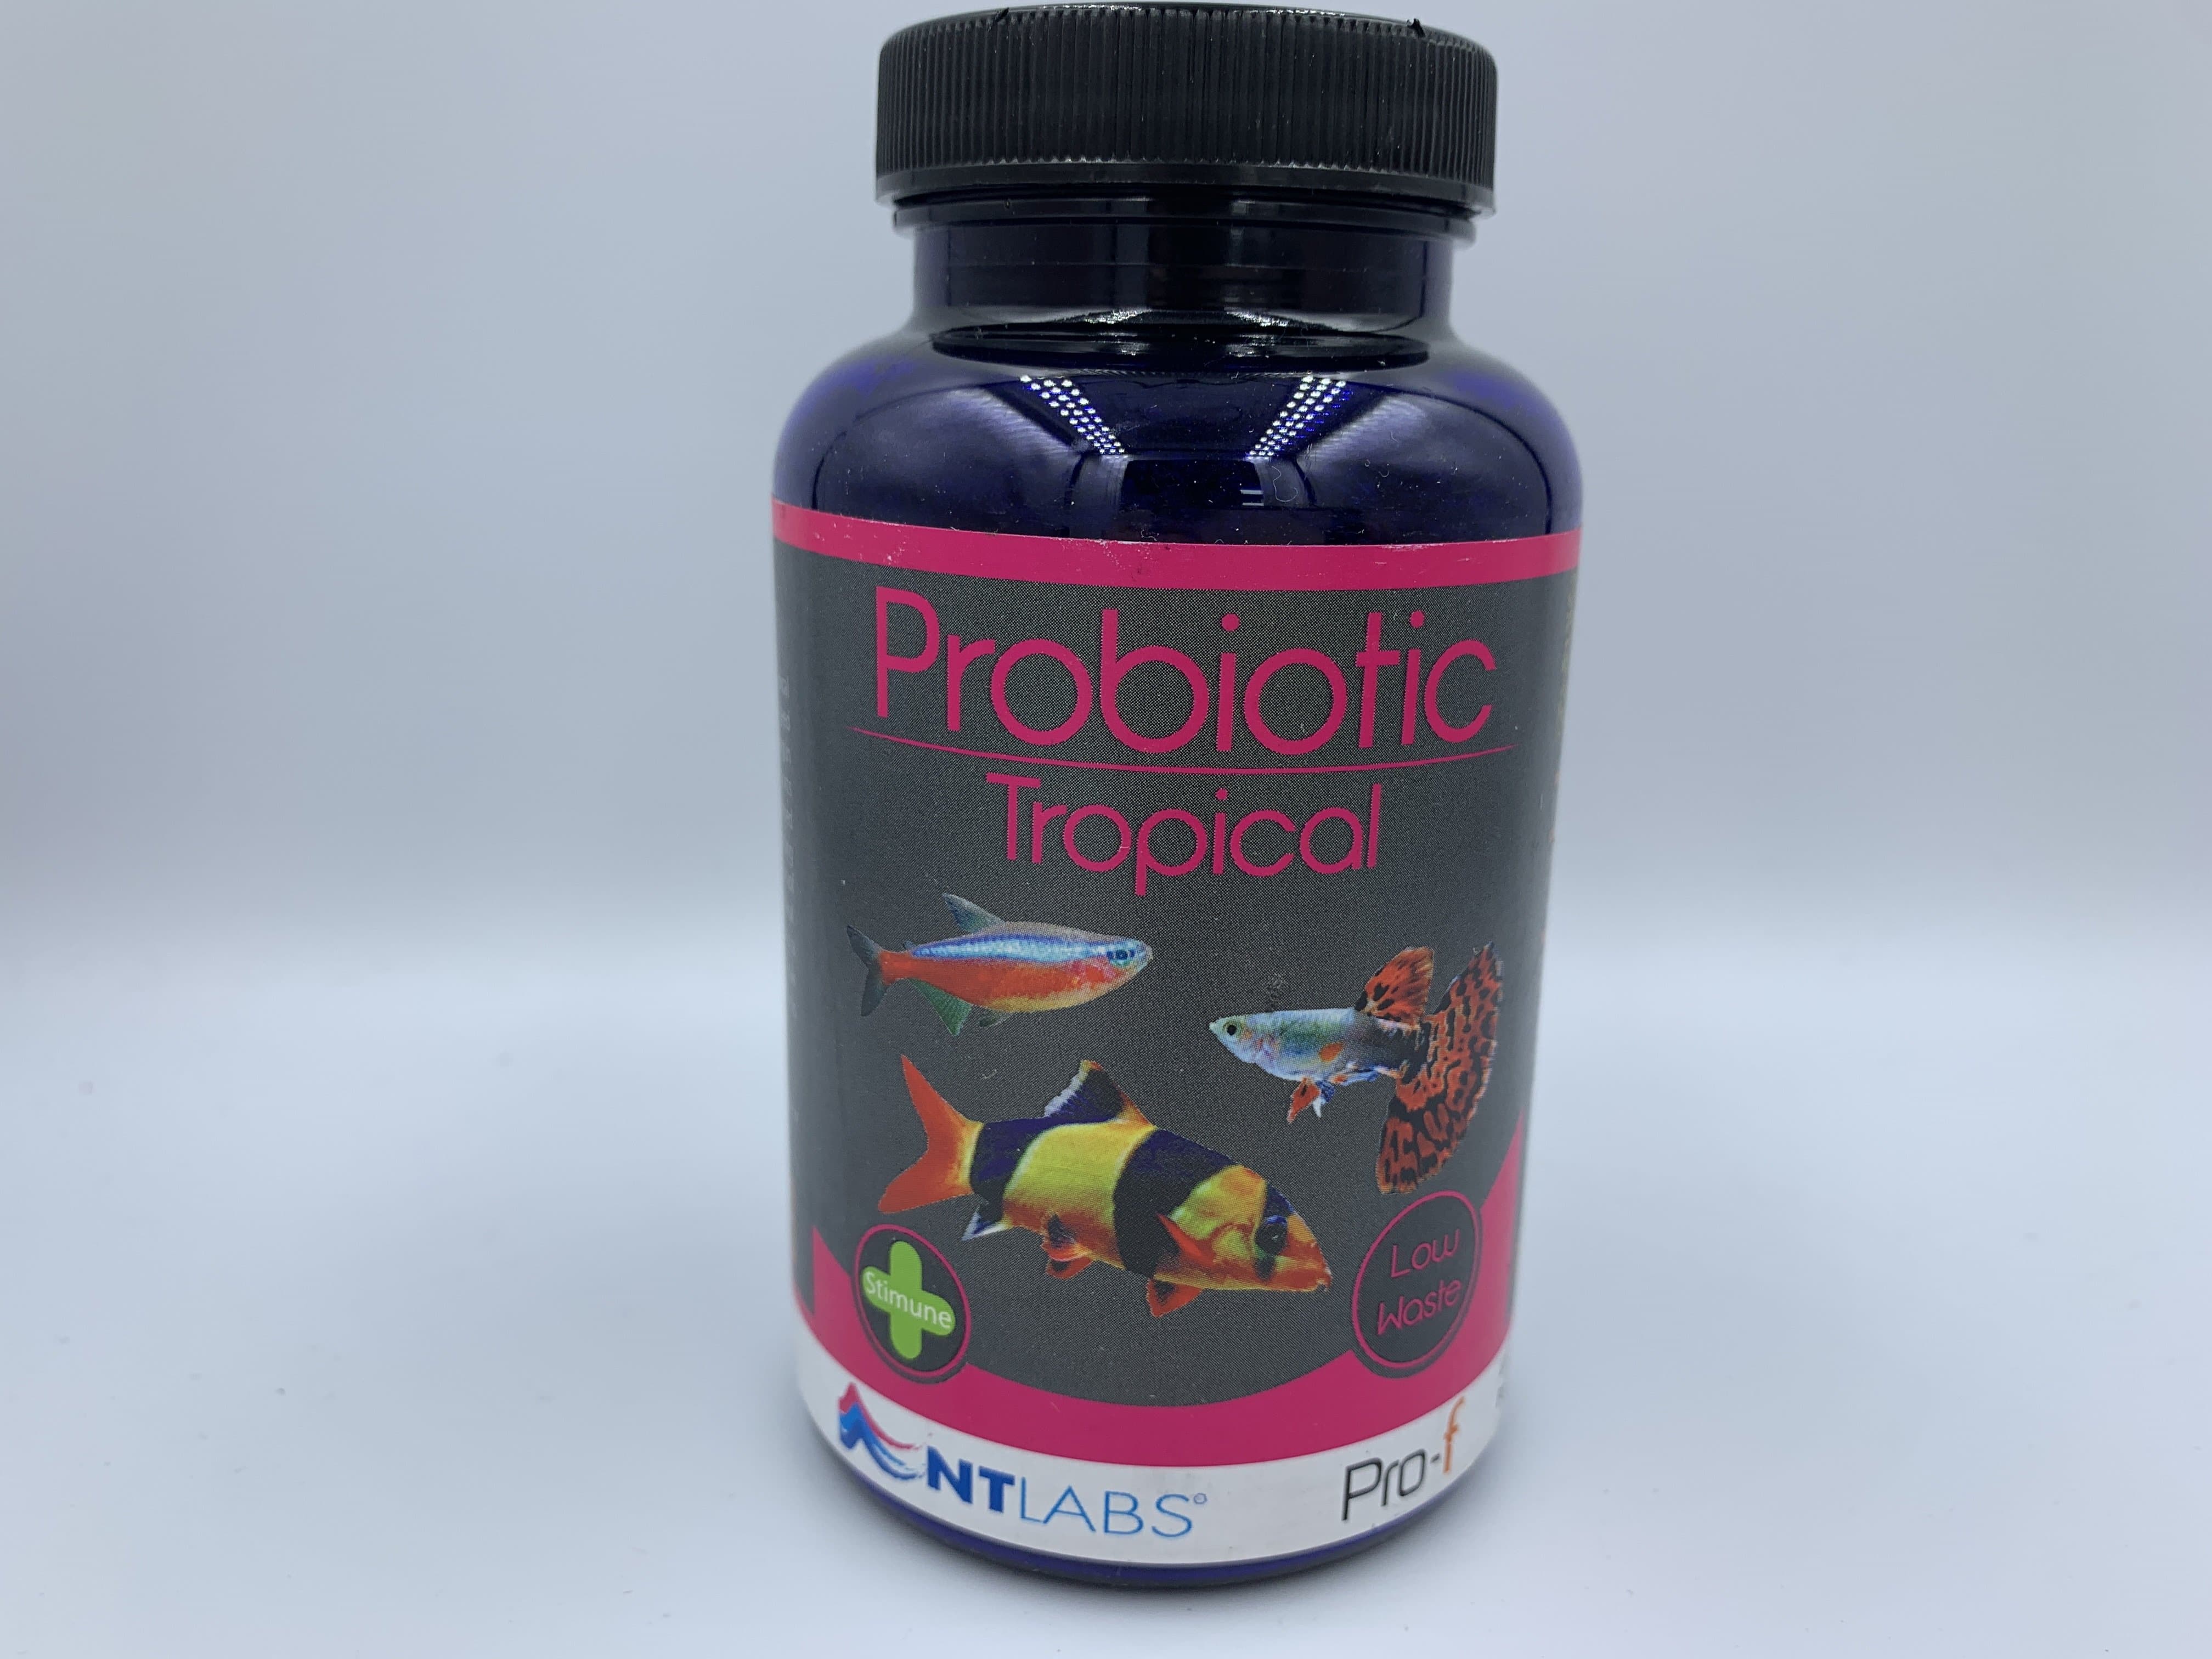 NTlabs Pro-F Probiotic Granule 360g - Tropical Supplies North East